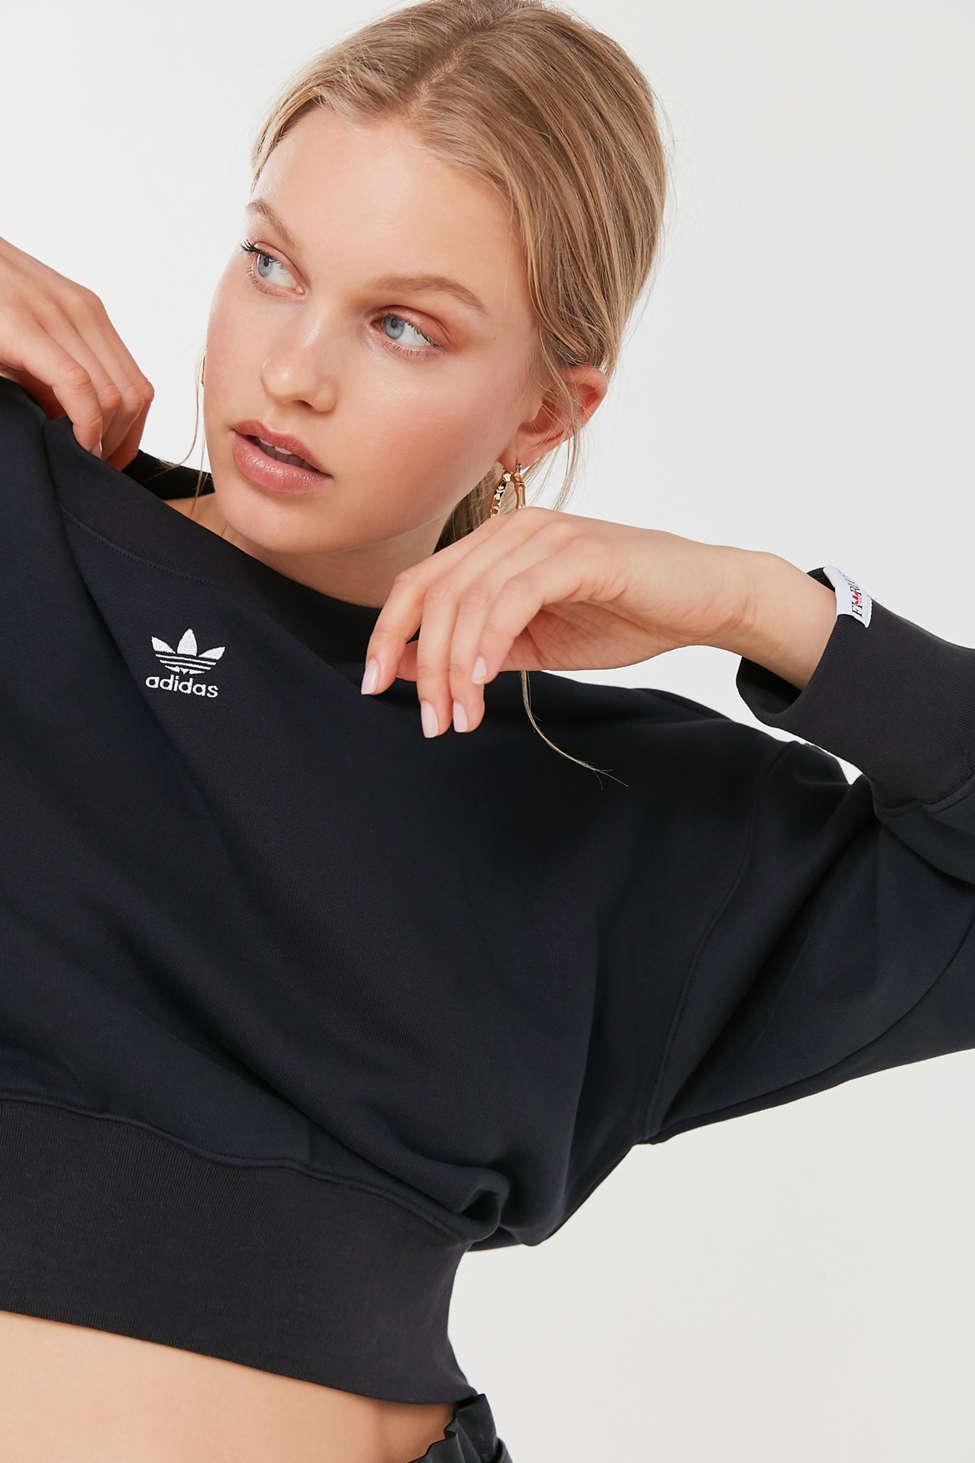 adidas Adidas Originals X Fiorucci Crew Neck Sweatshirt | Lyst